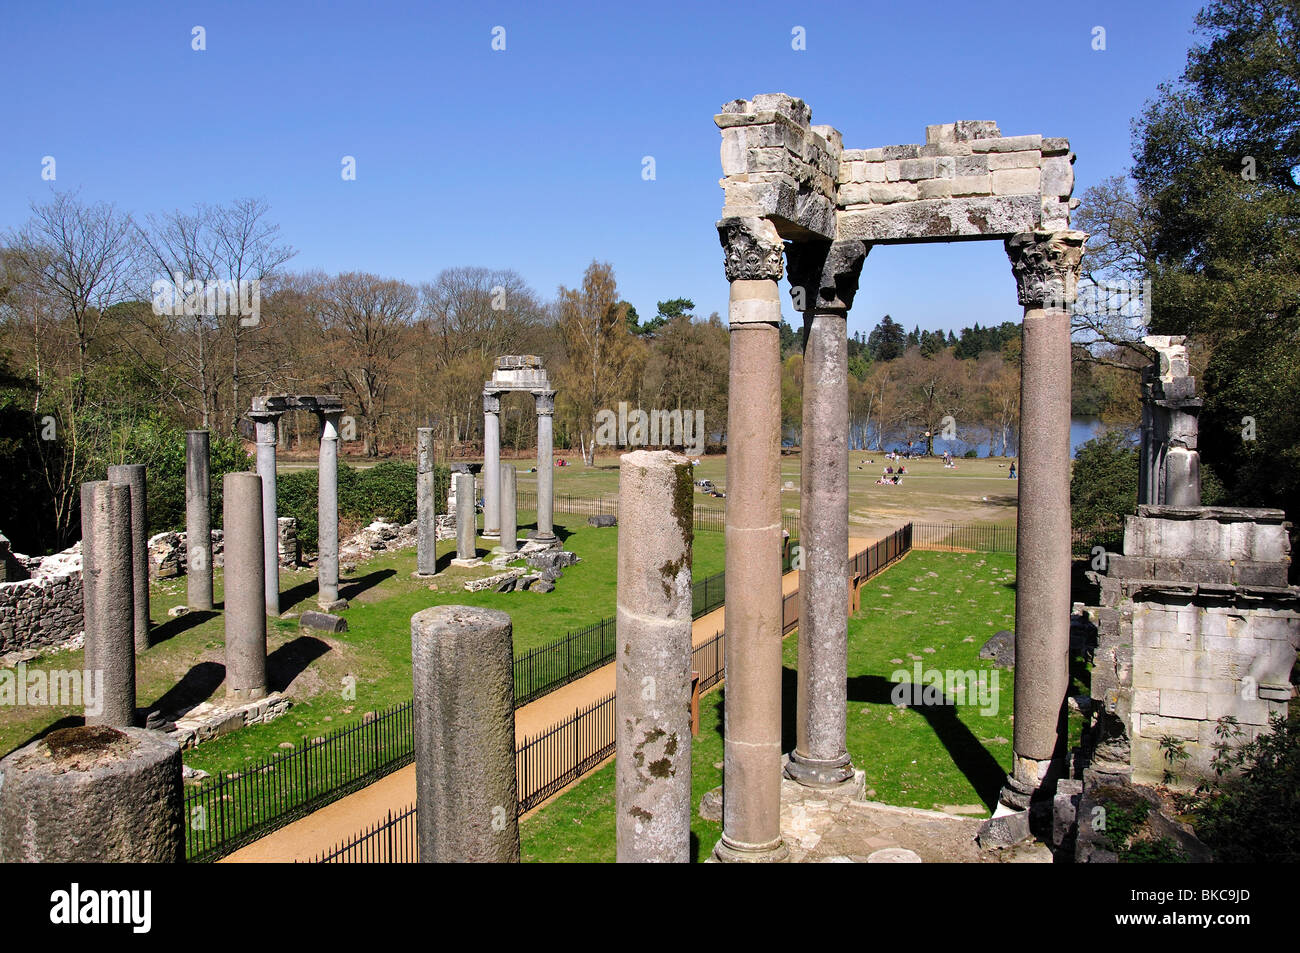 Ruines Romaines de Leptis Magna, Virginia Water, Surrey, Angleterre, Royaume-Uni Banque D'Images